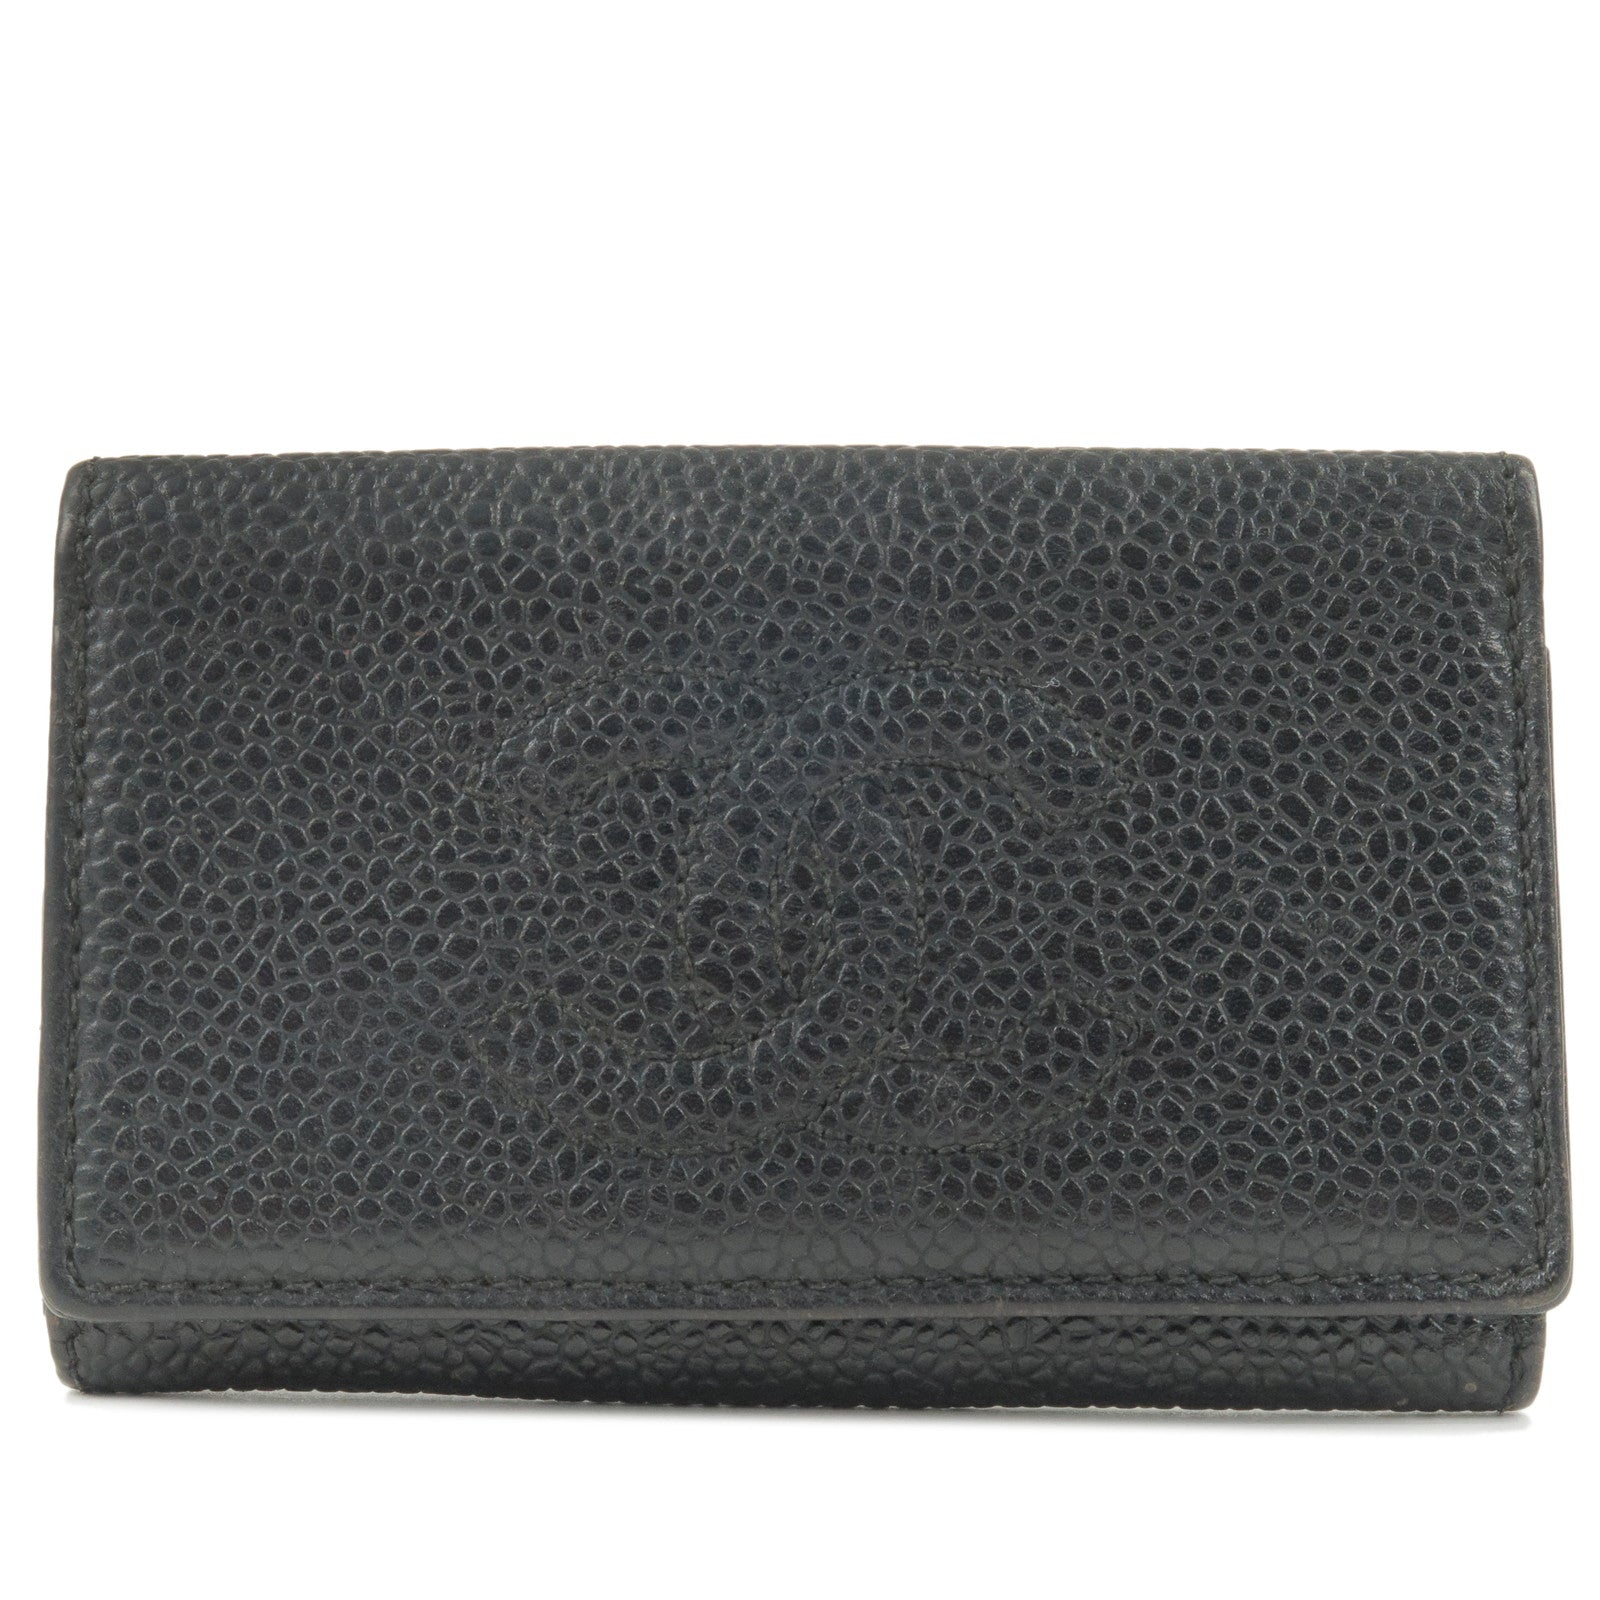 chanel key holder wallet